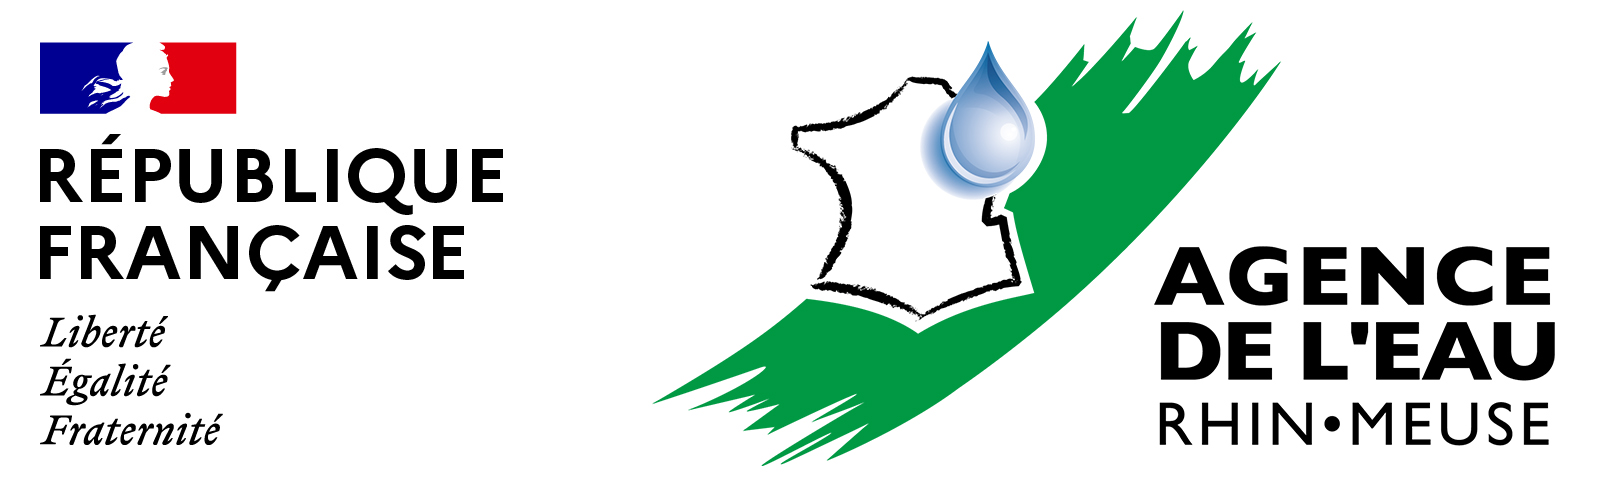 Agence de l'eau Rhin Meuse logo